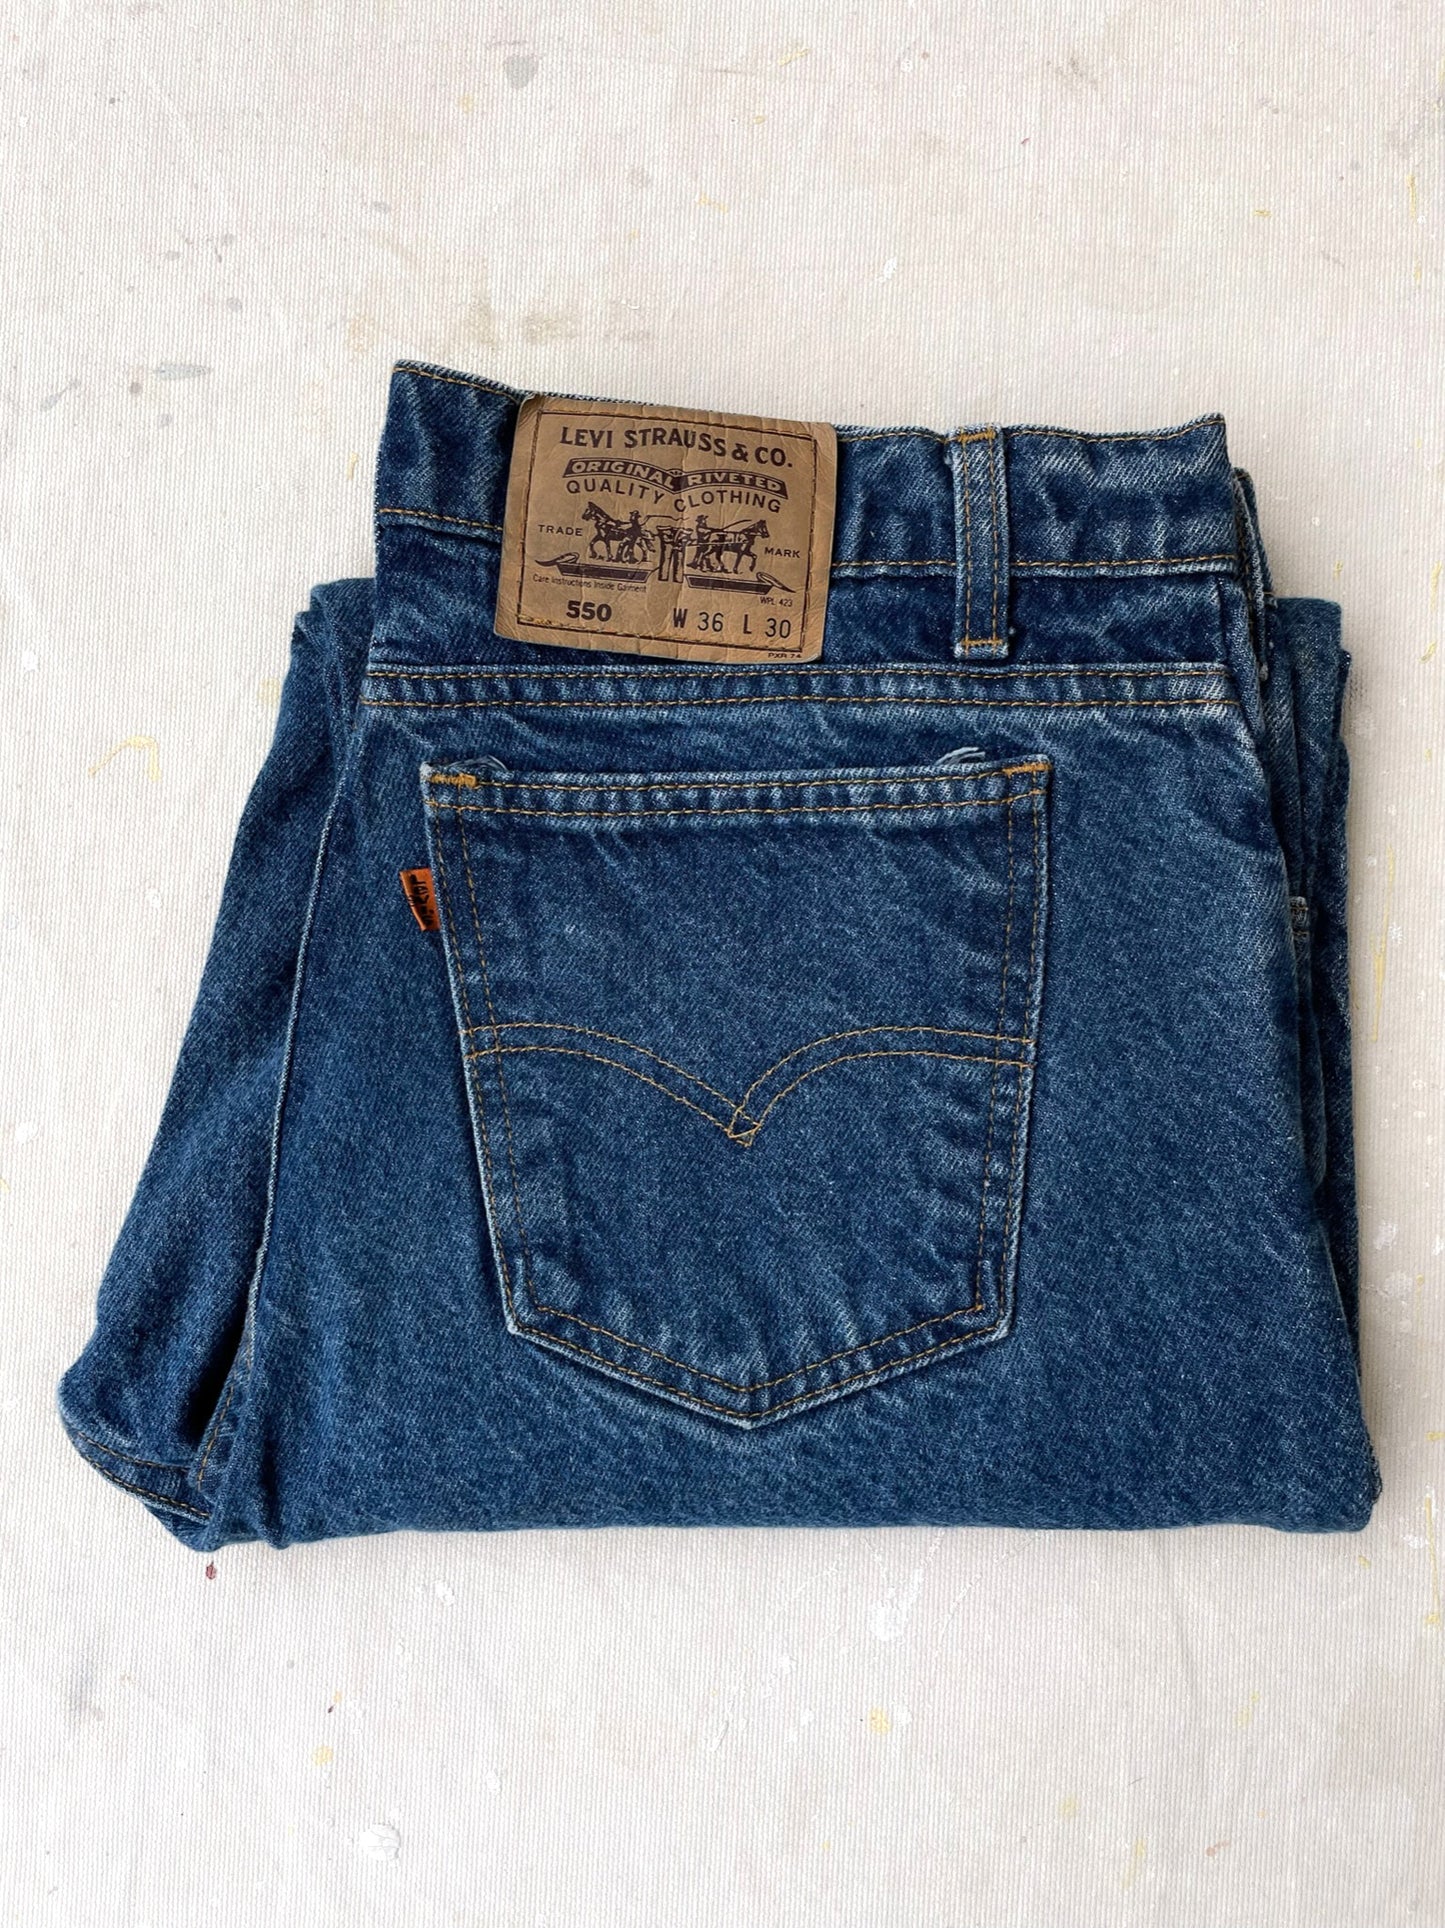 Levi's 550 Orange Tab Jeans—[34X30]